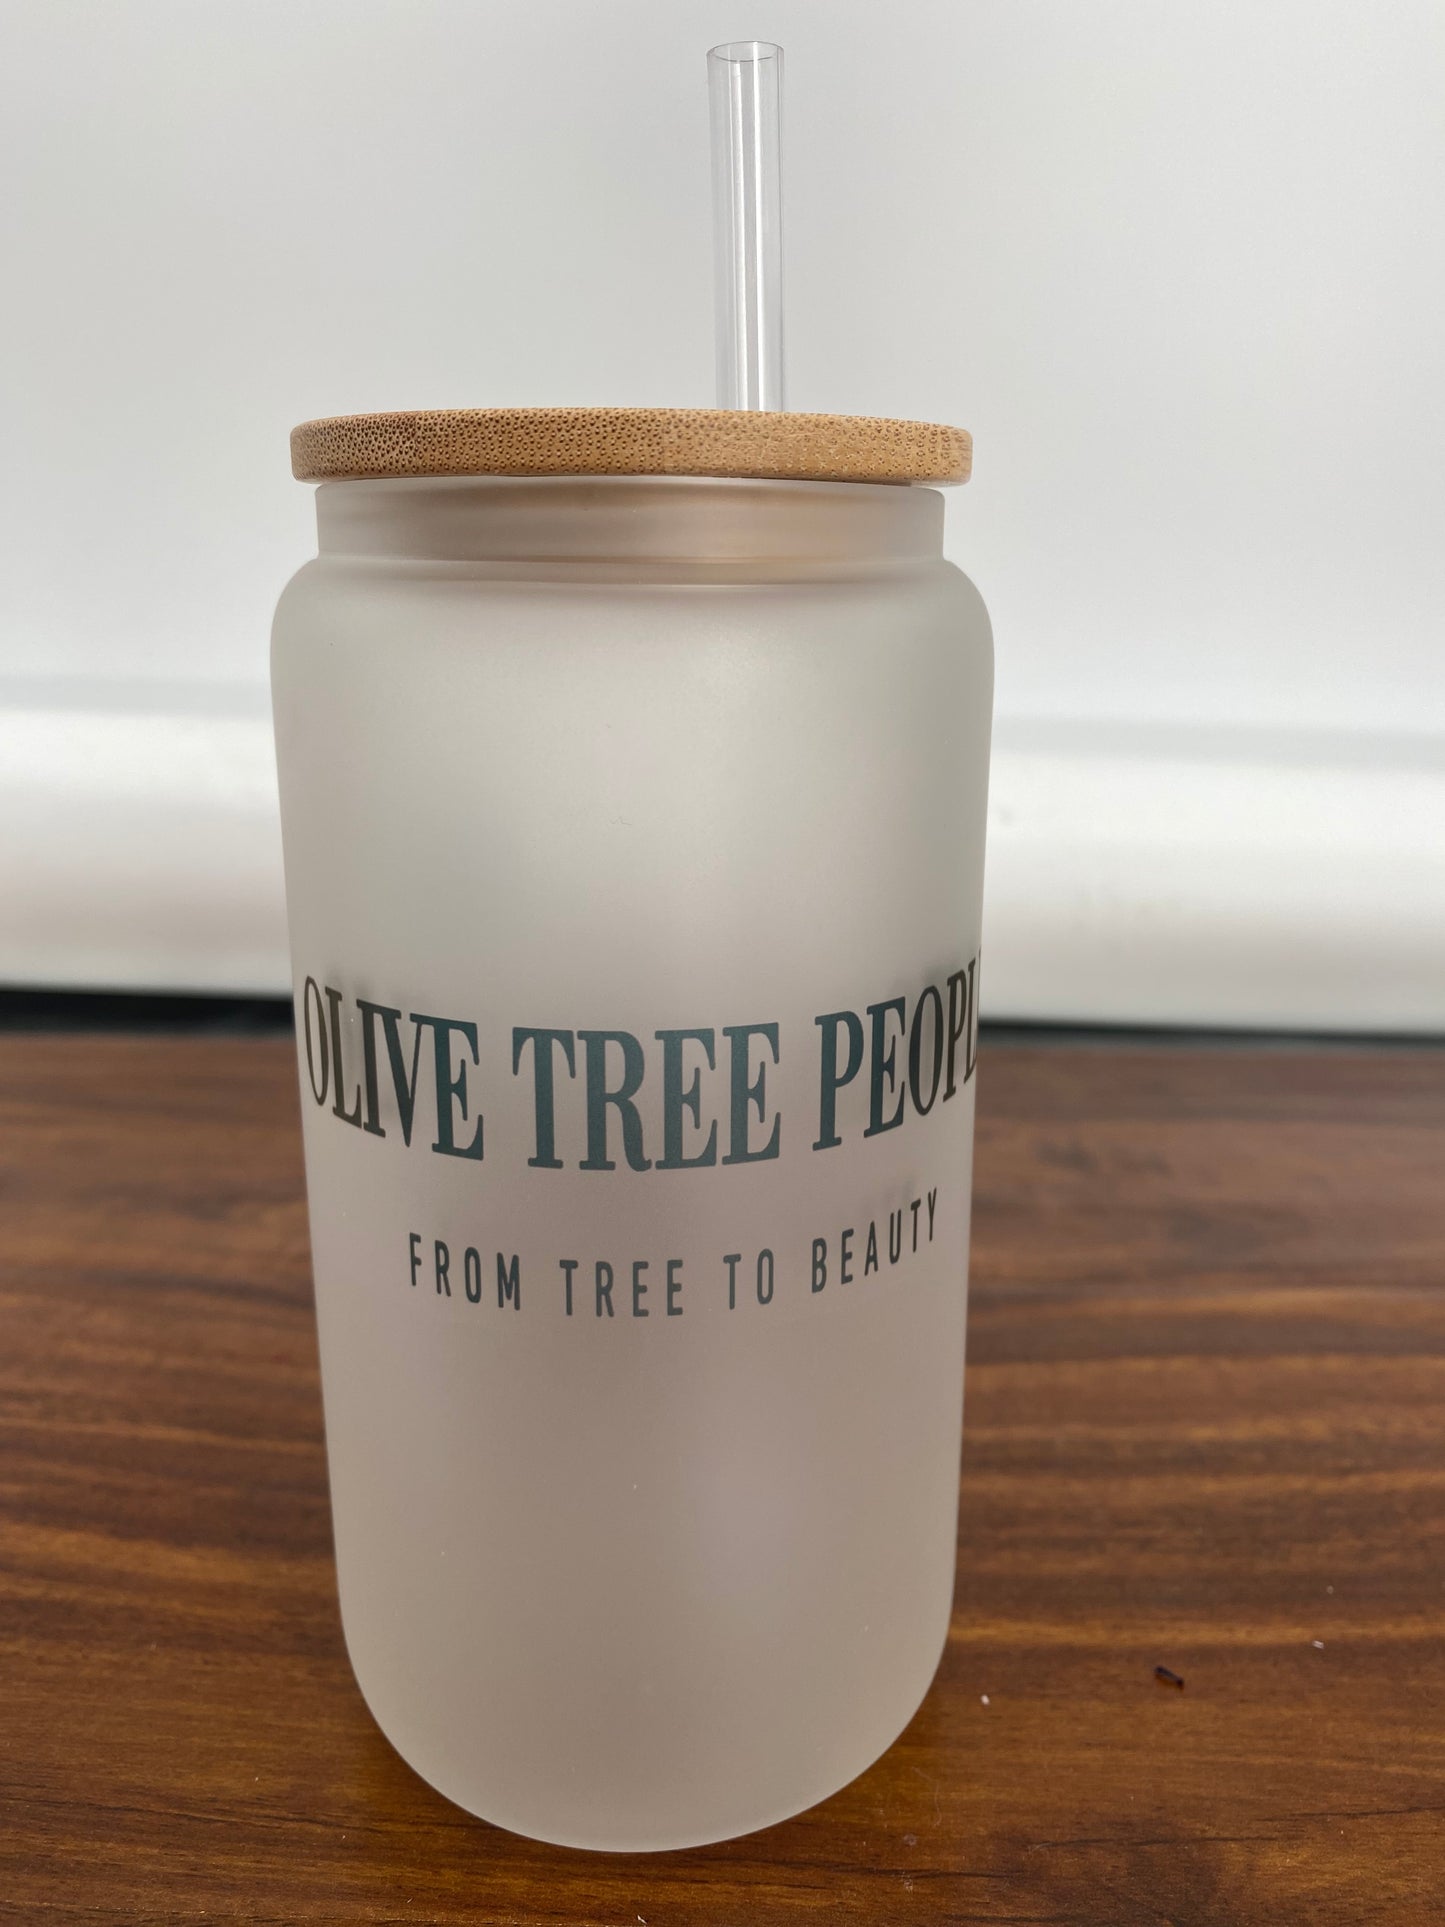 Olive Tree People Cups